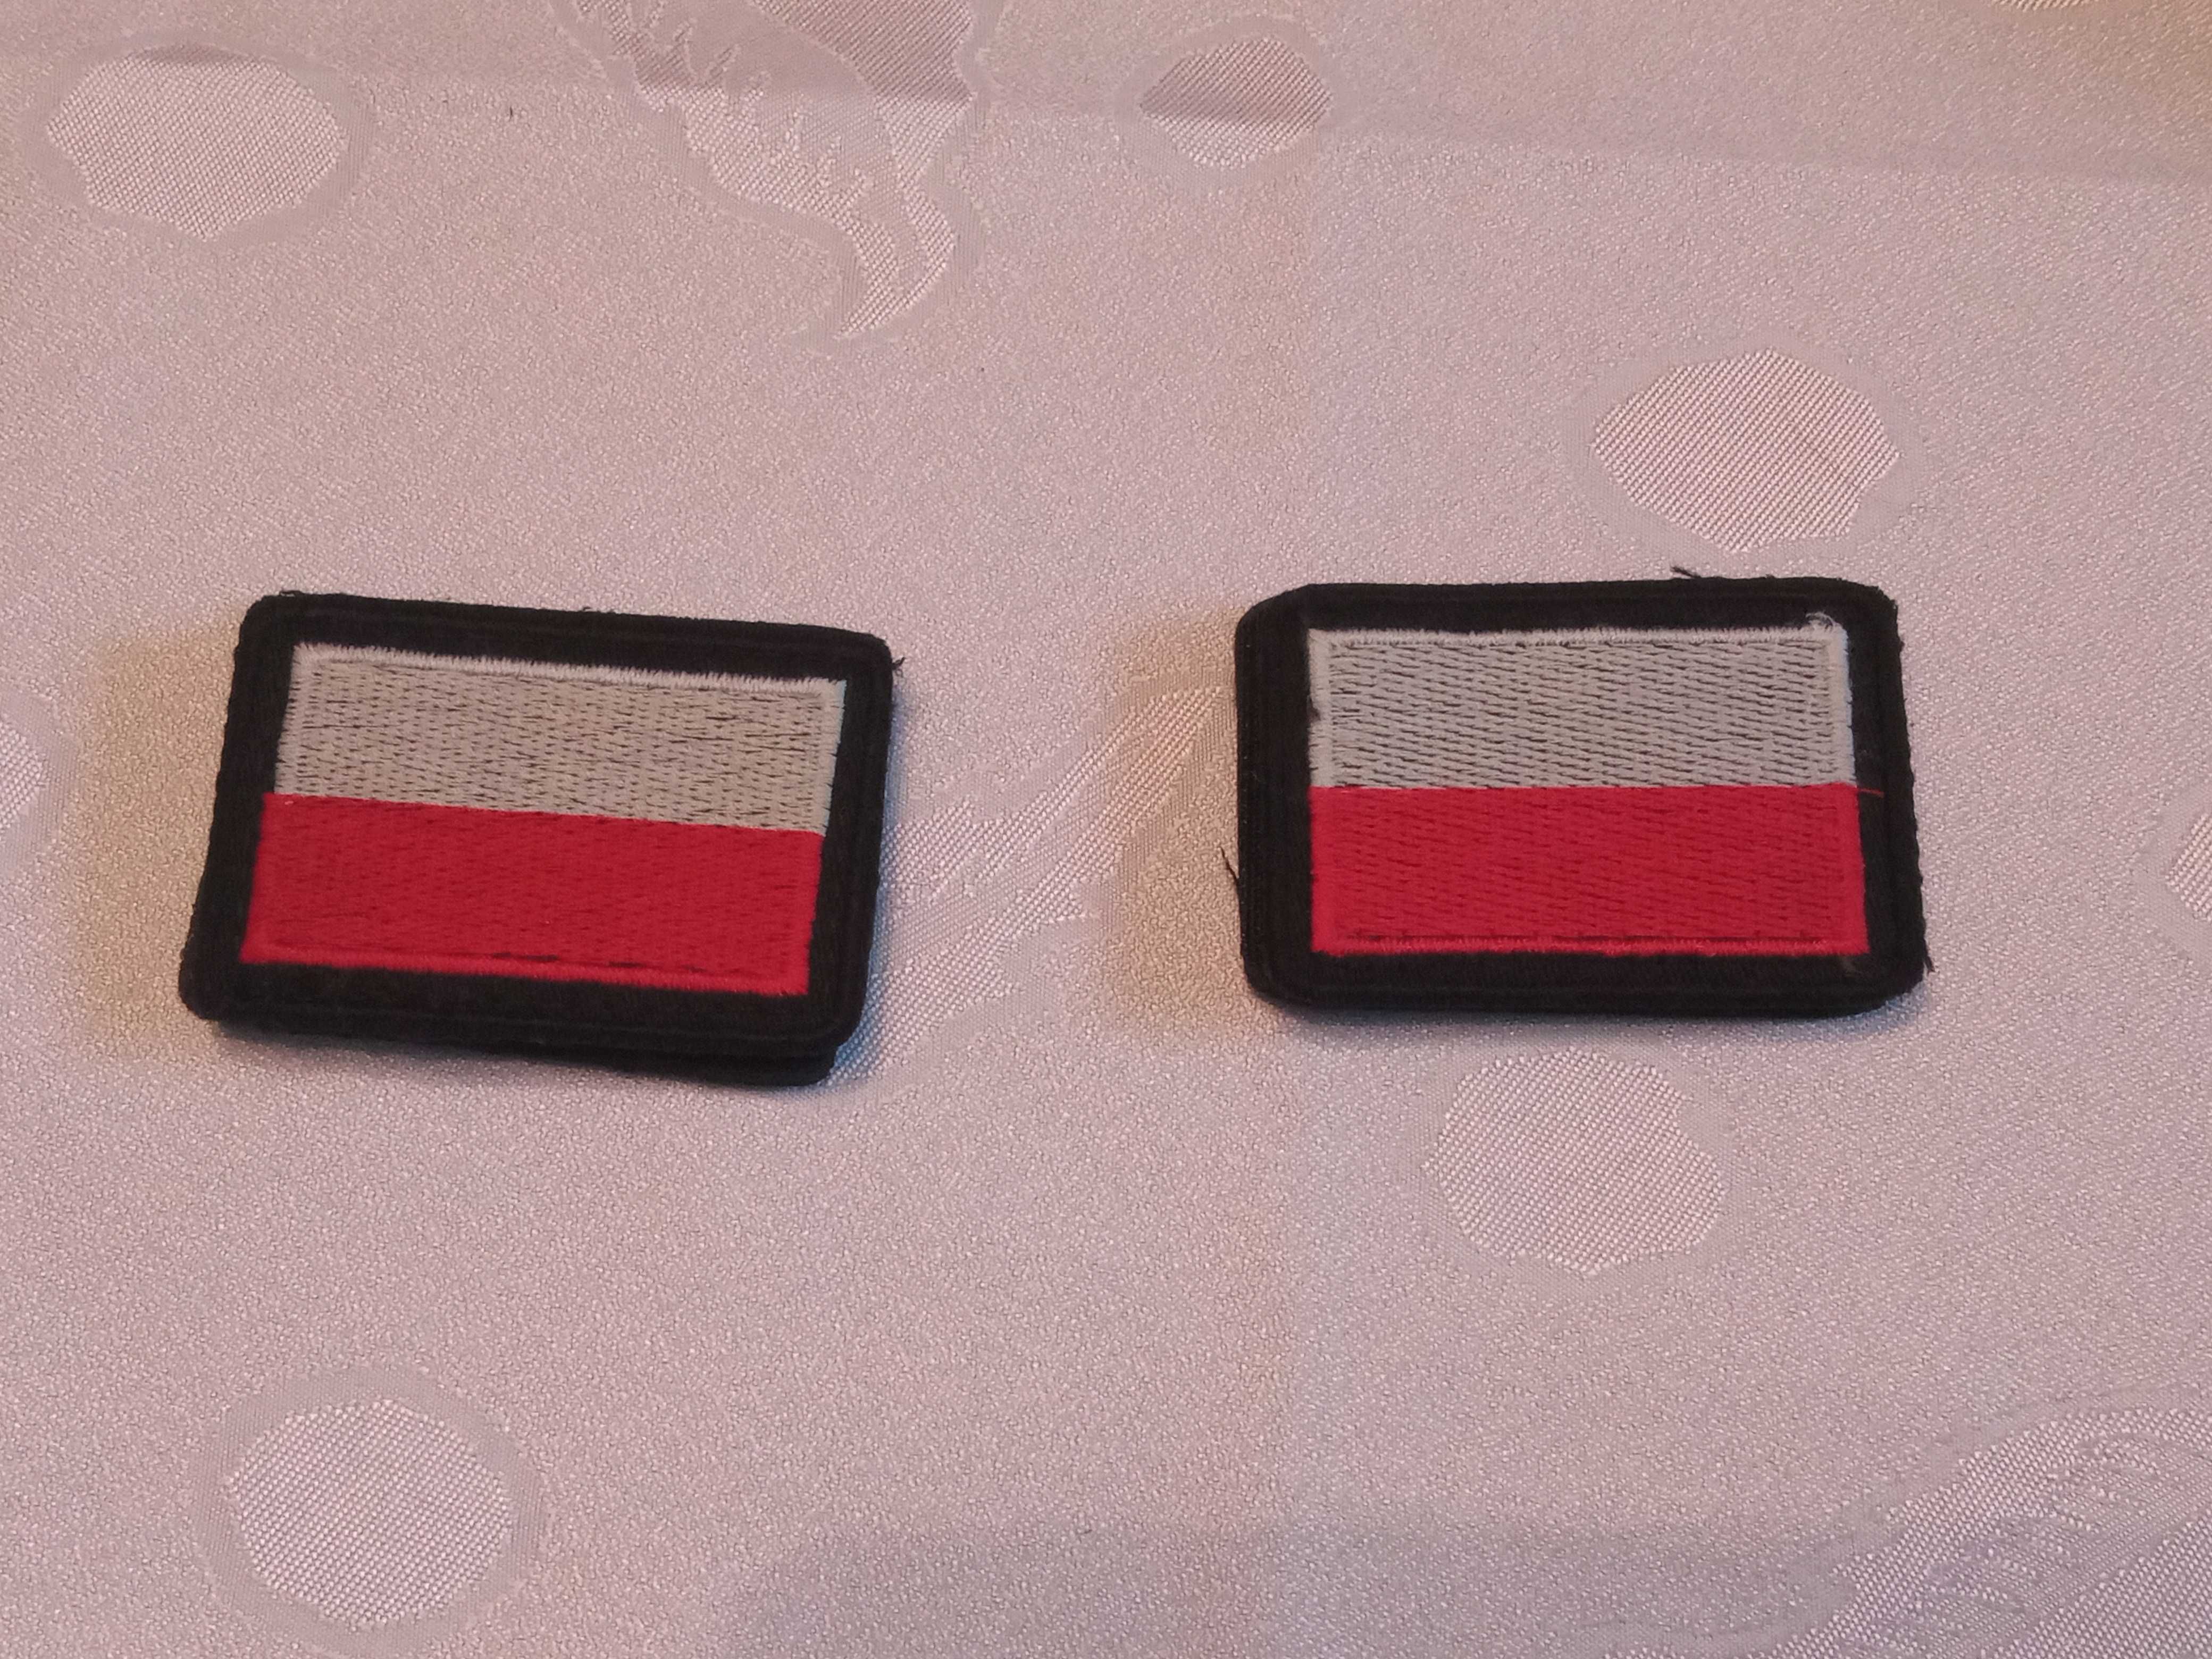 Flaga Polski haftowana na mundur z rzepem 1 kpl.